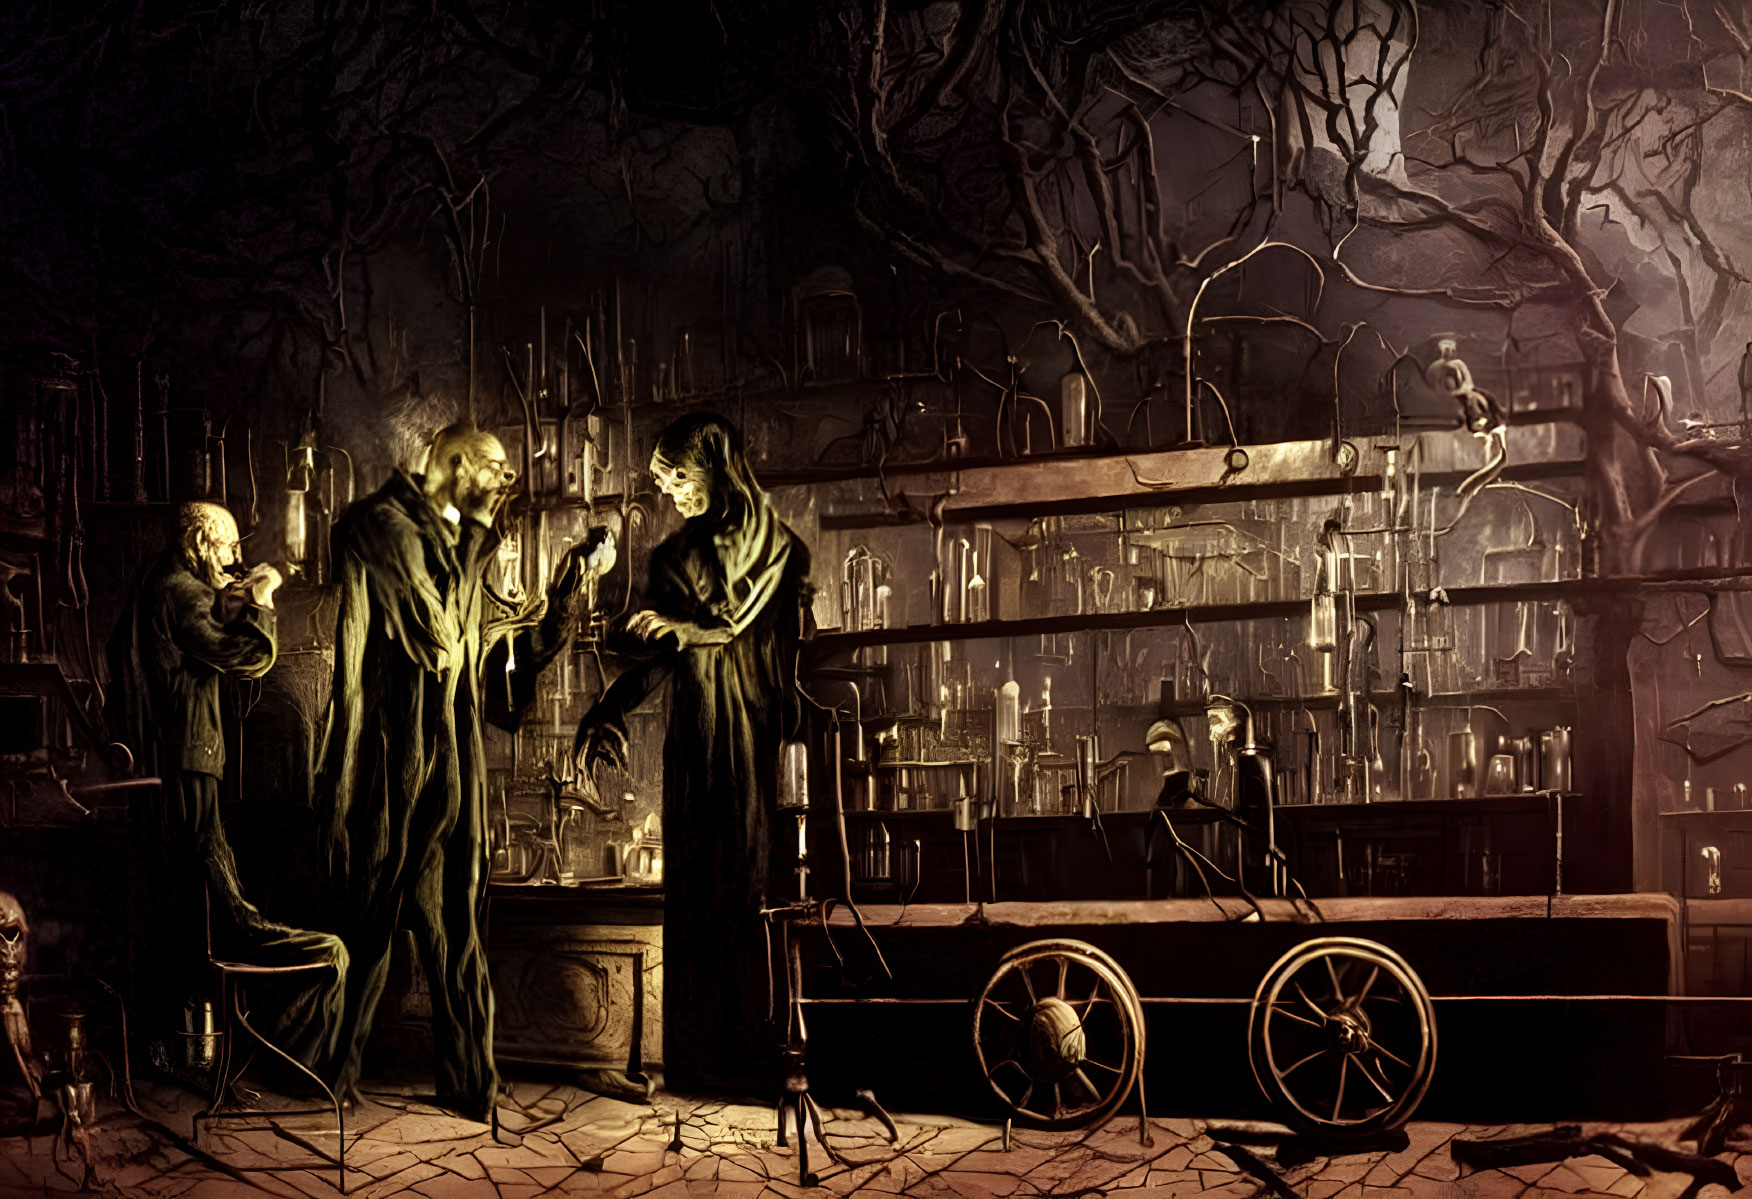 Three Figures in Robes Examining Flask in Alchemist's Lab